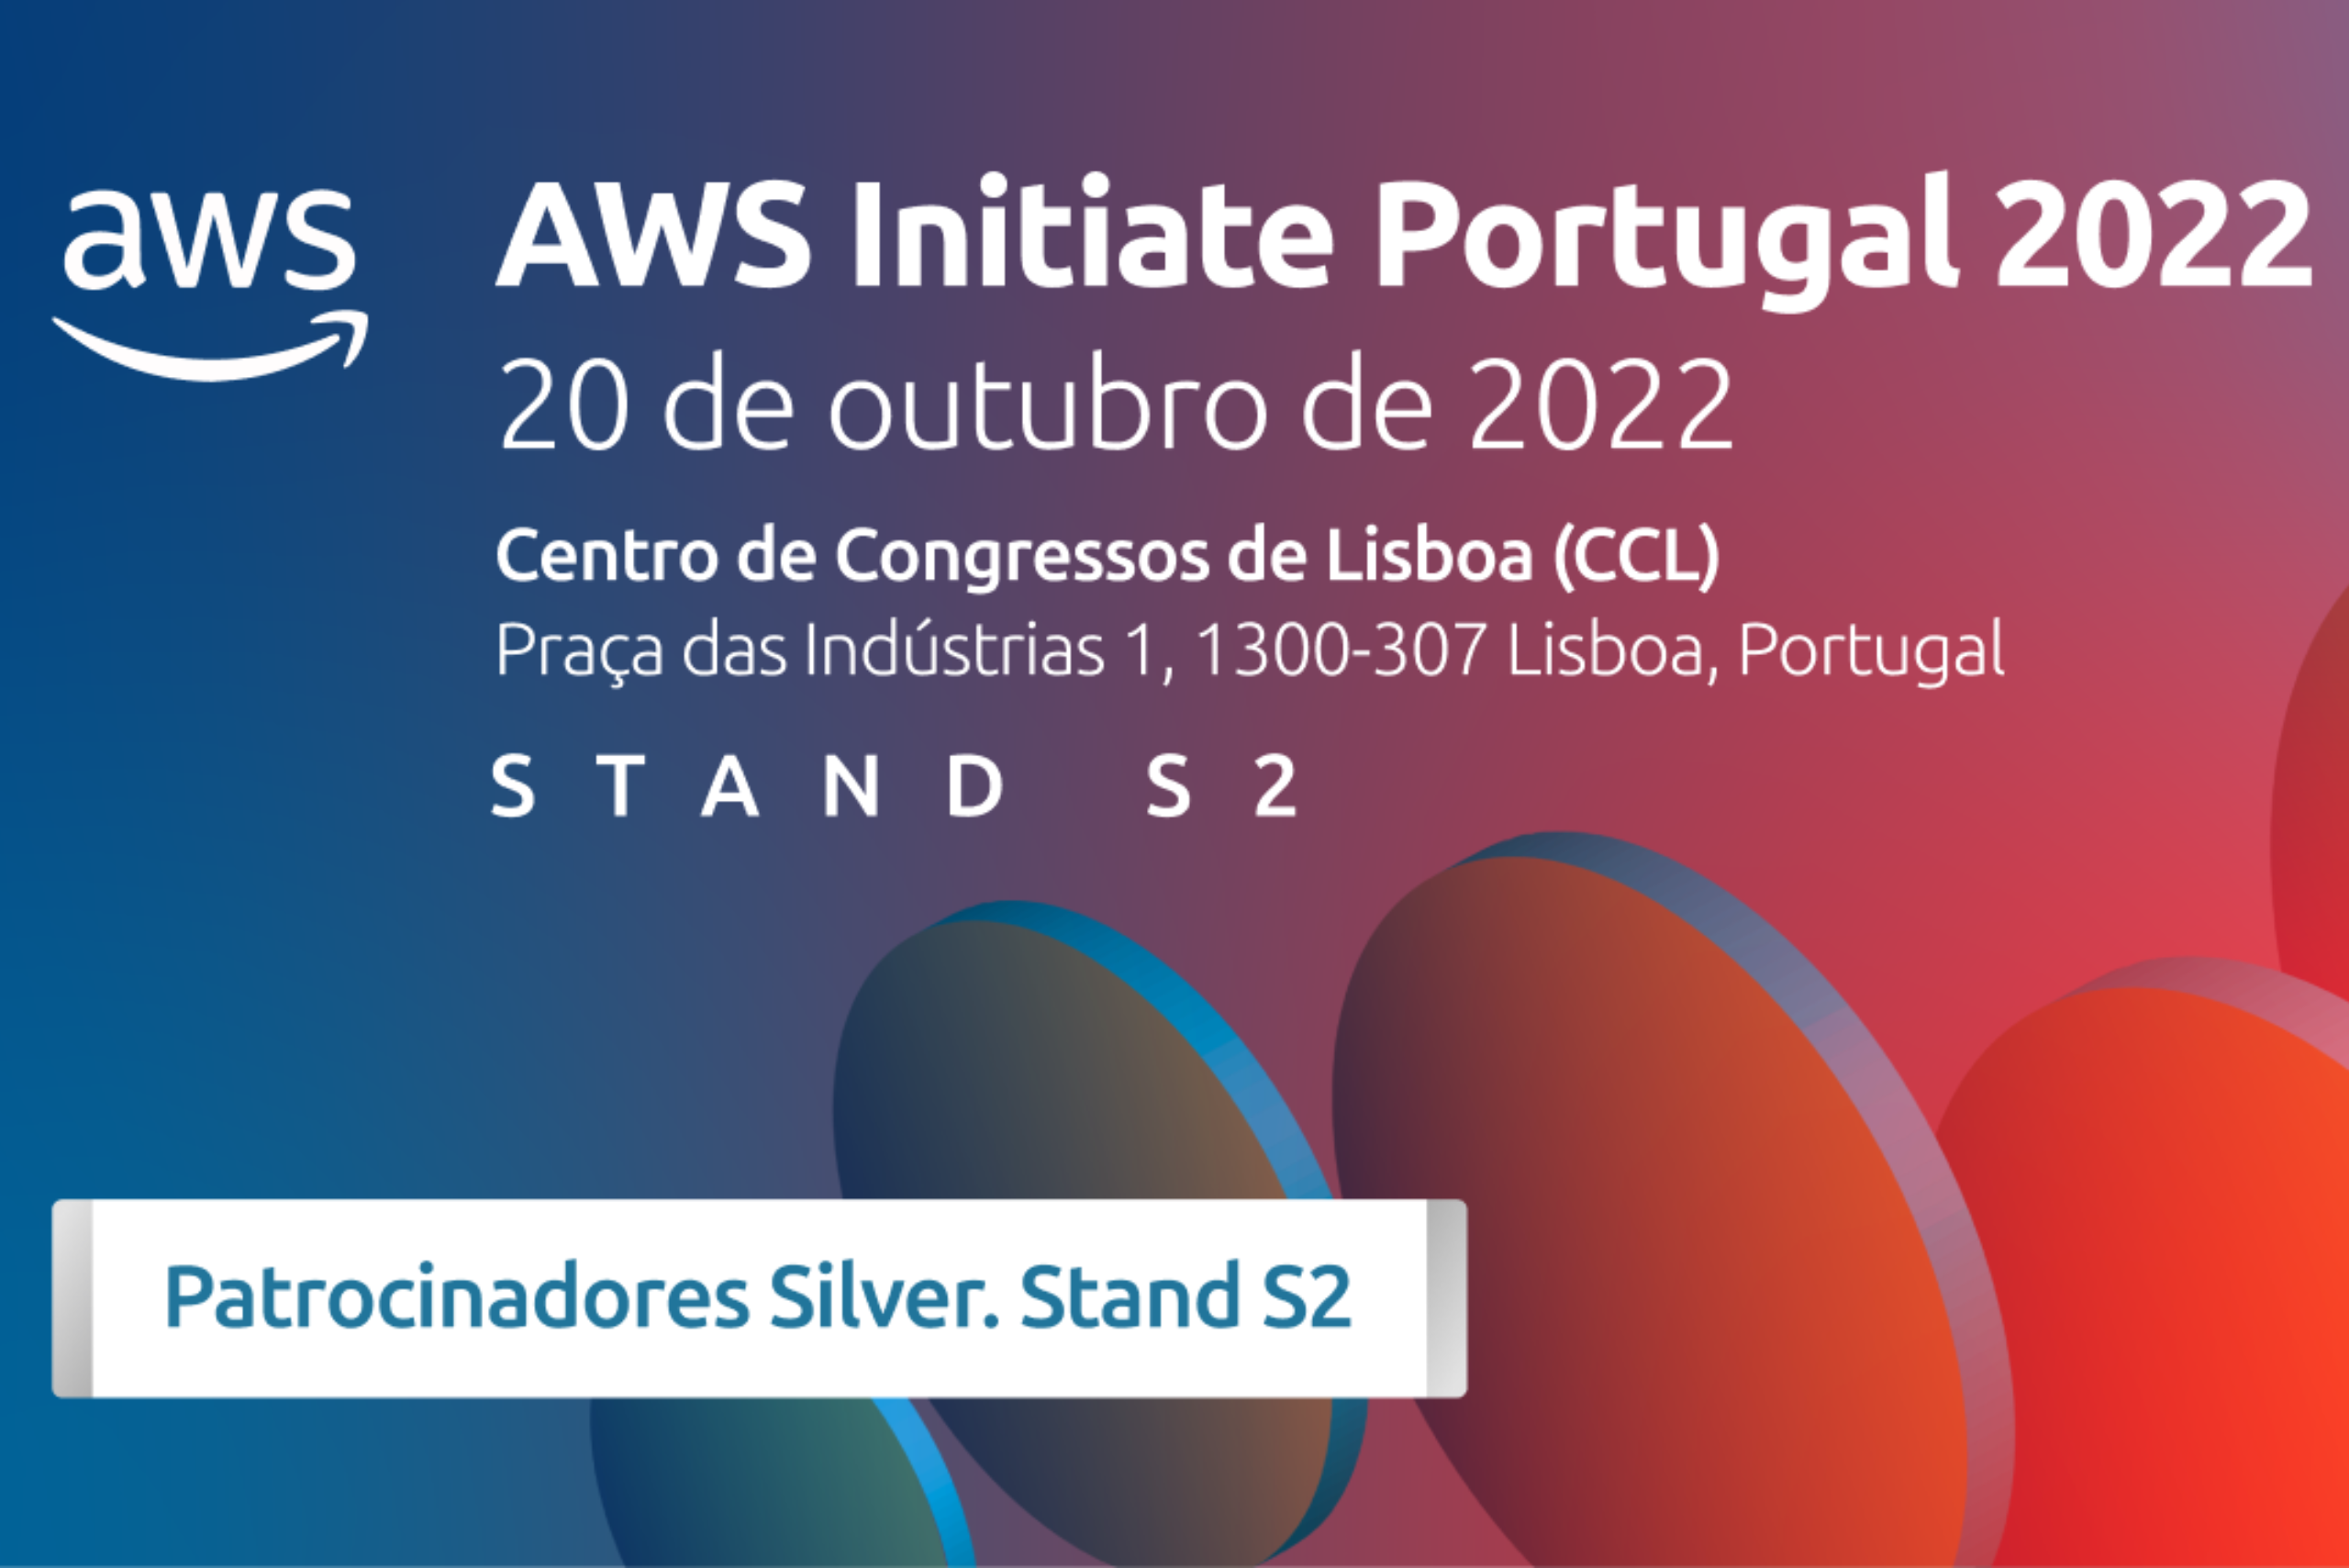 AWS Initiate Portugal 2022